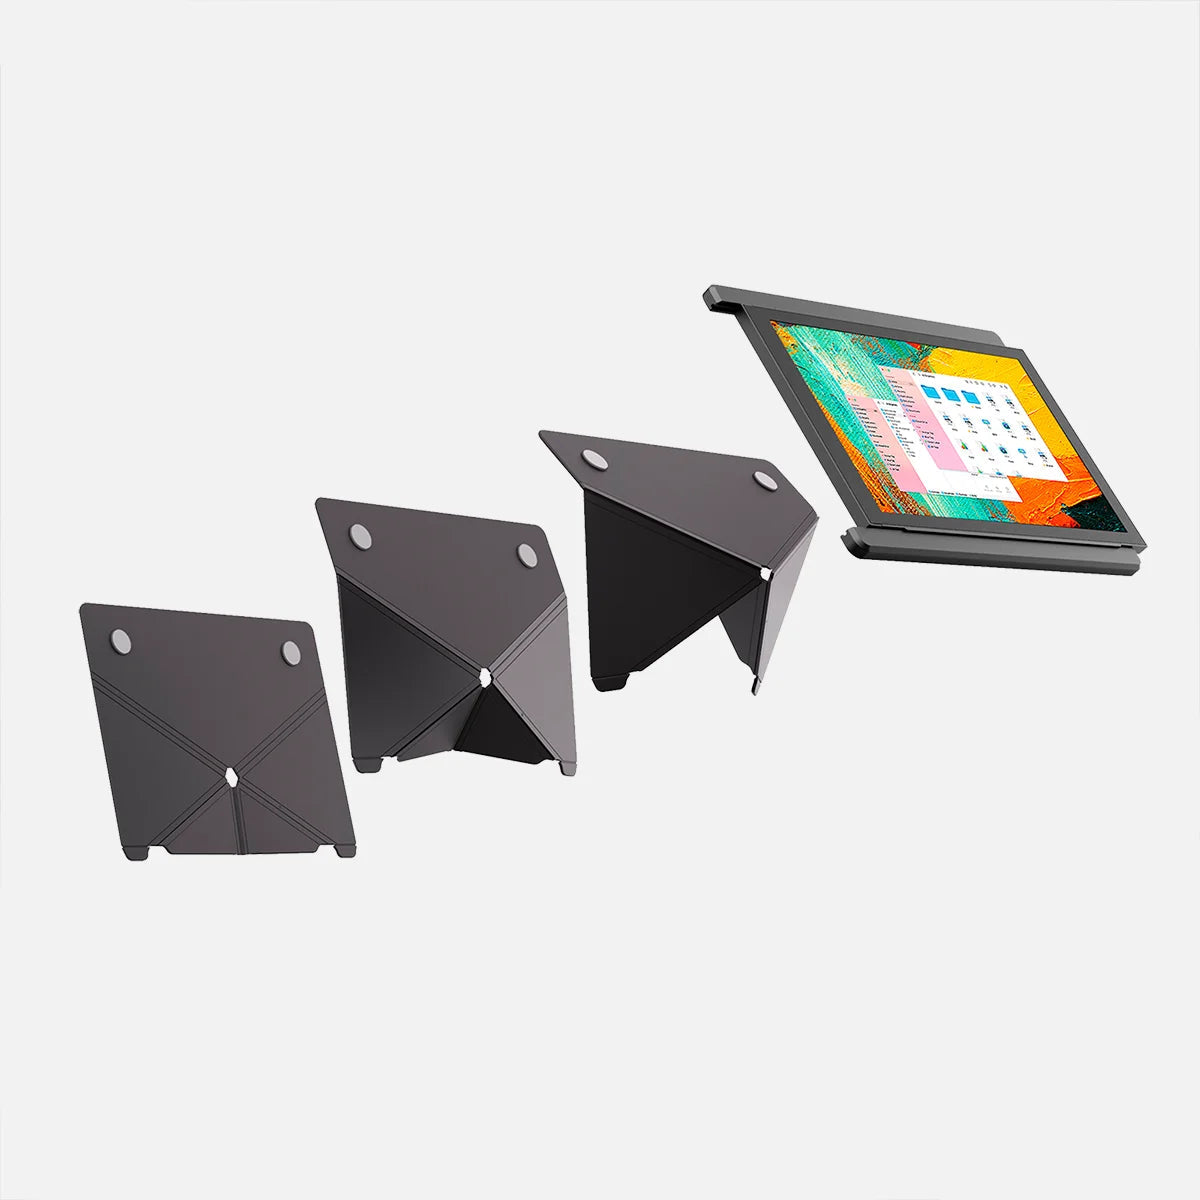 Origami Portable Monitor Kickstand